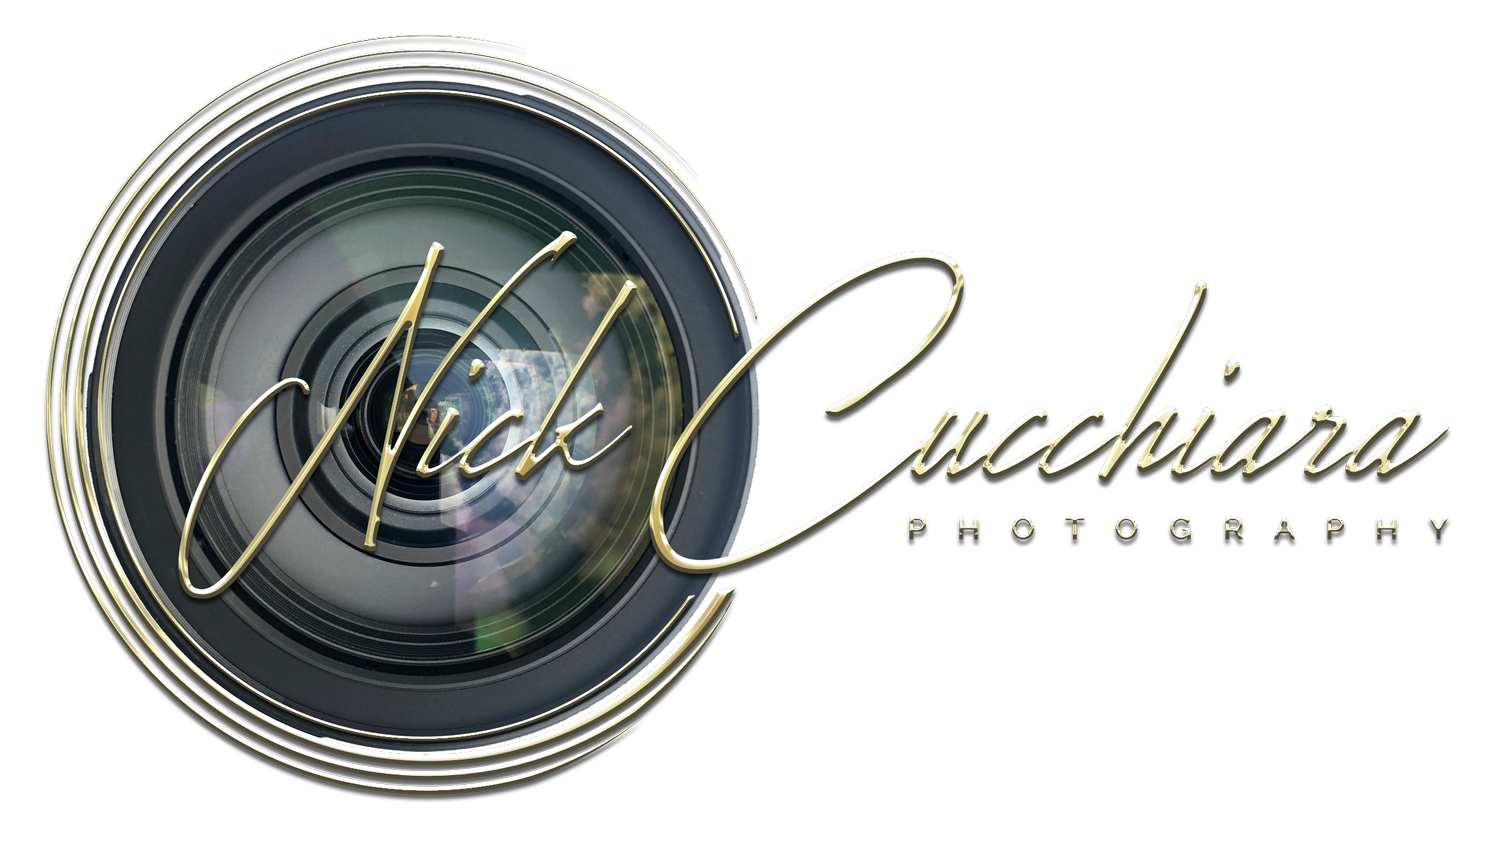 Nick Cucchiara Photography